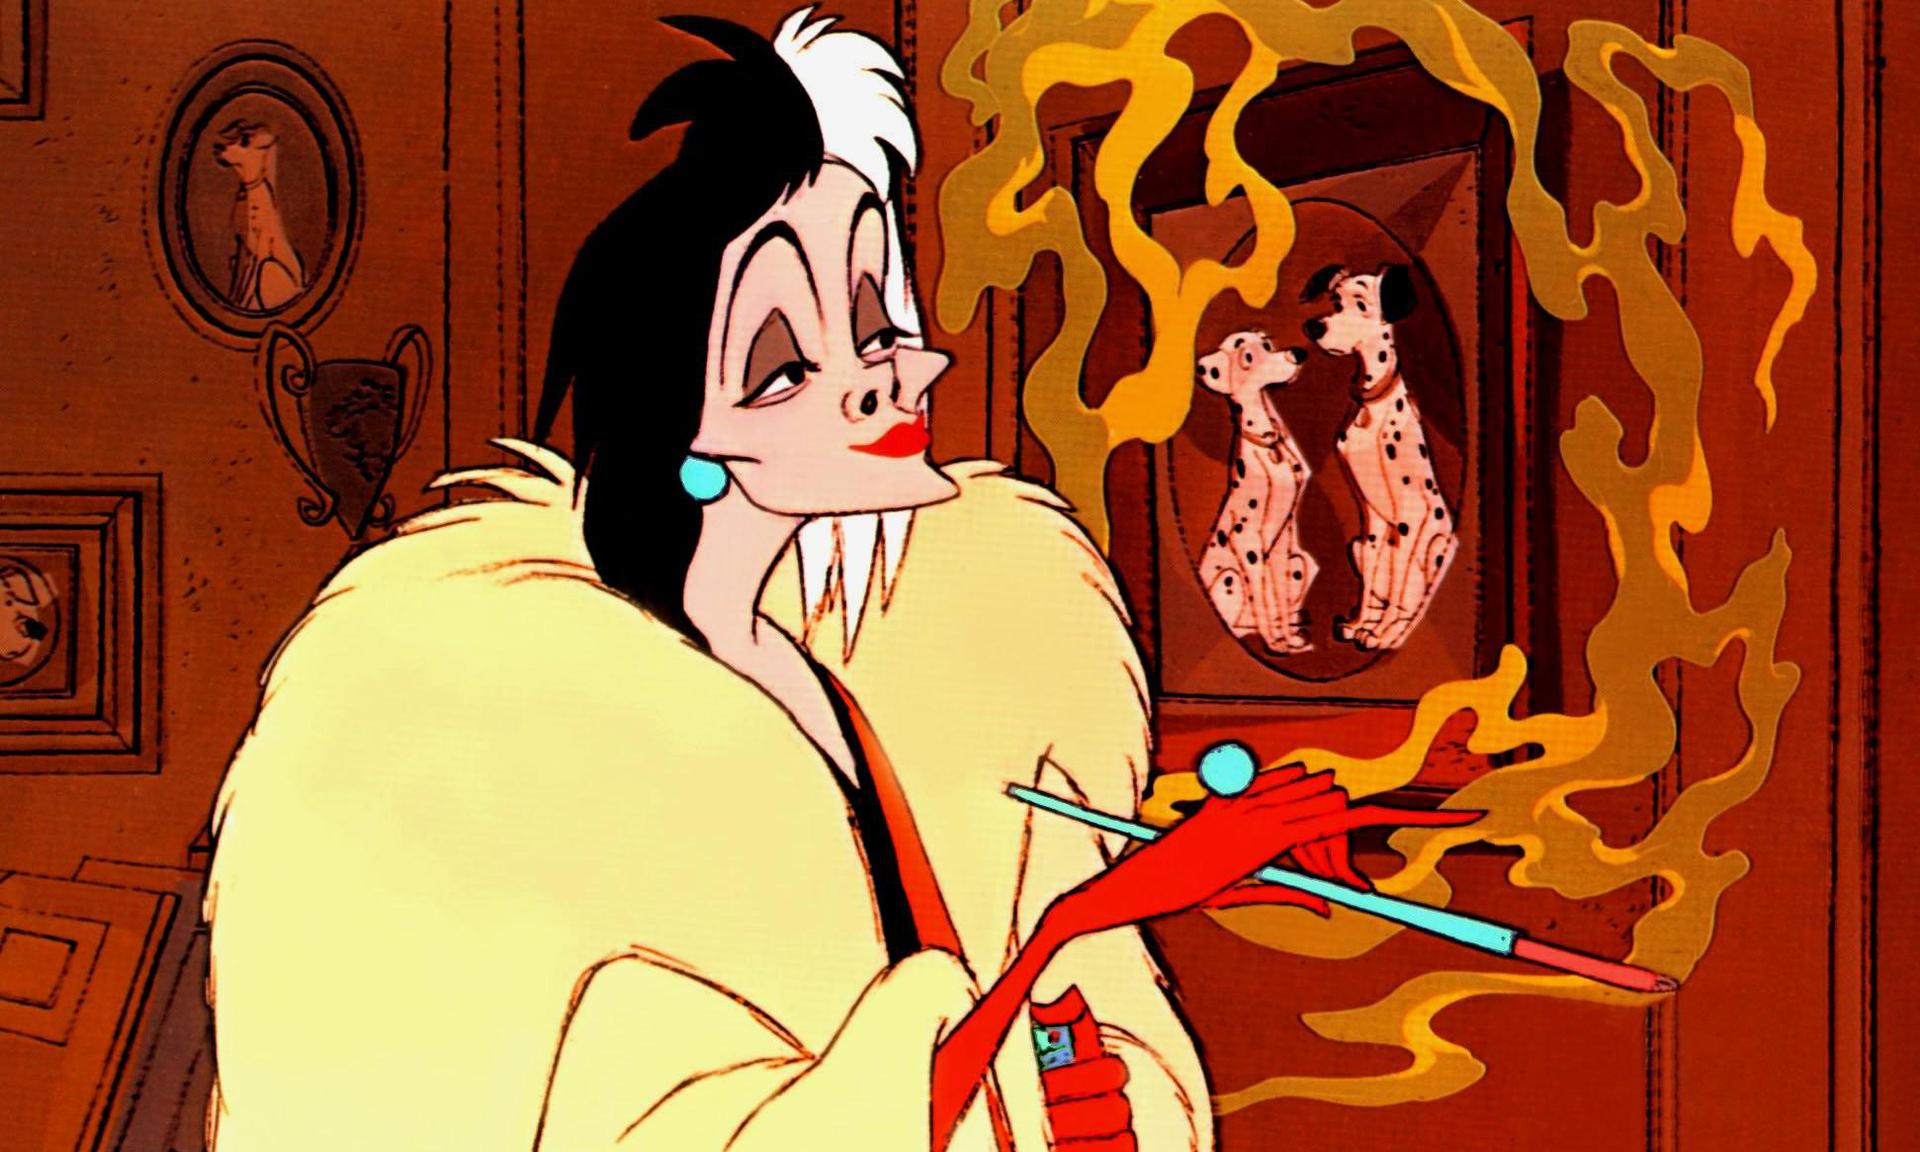 Cruella de Vil in the original Disney film “One Hundred and One Dalmatians."